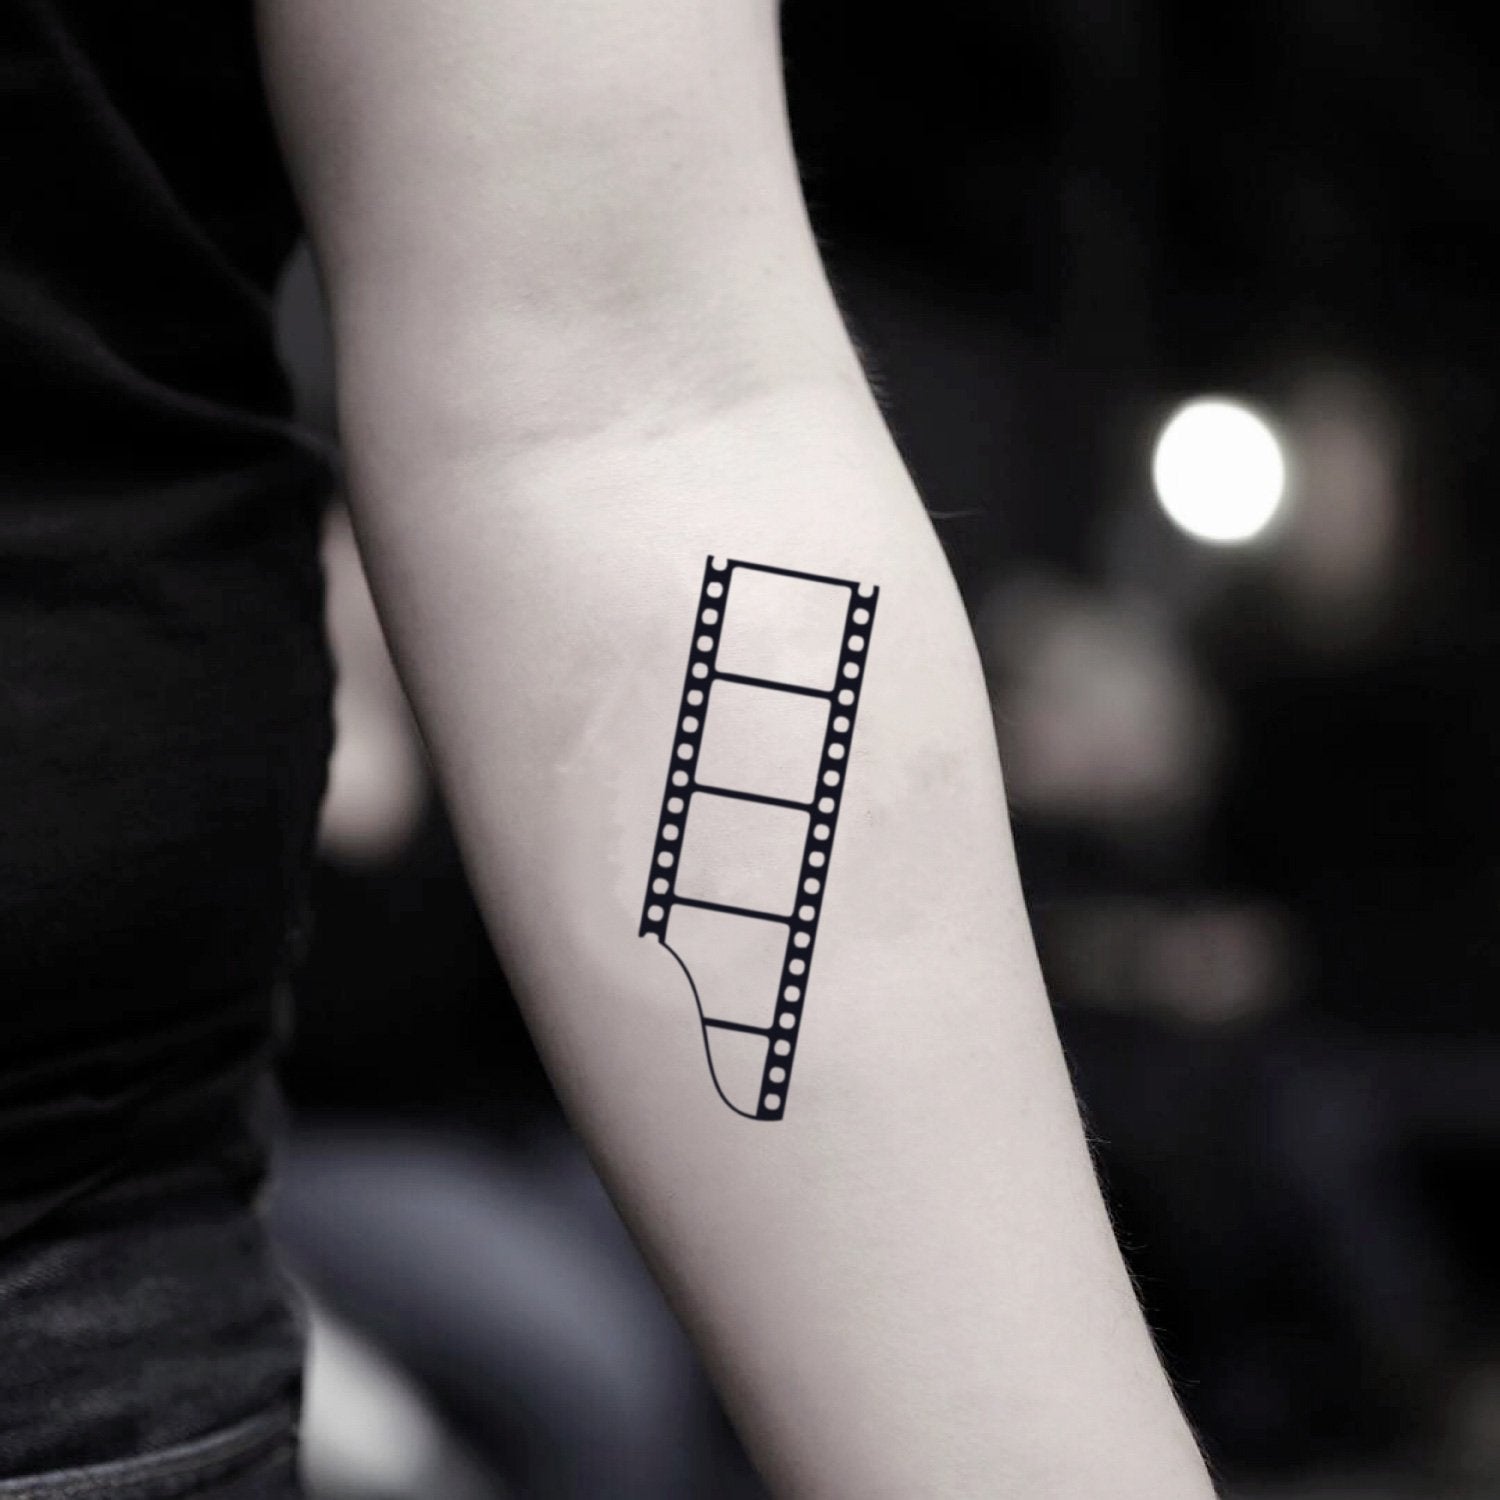 fake small film strip roll cinema movie illustrative temporary tattoo sticker design idea on inner arm